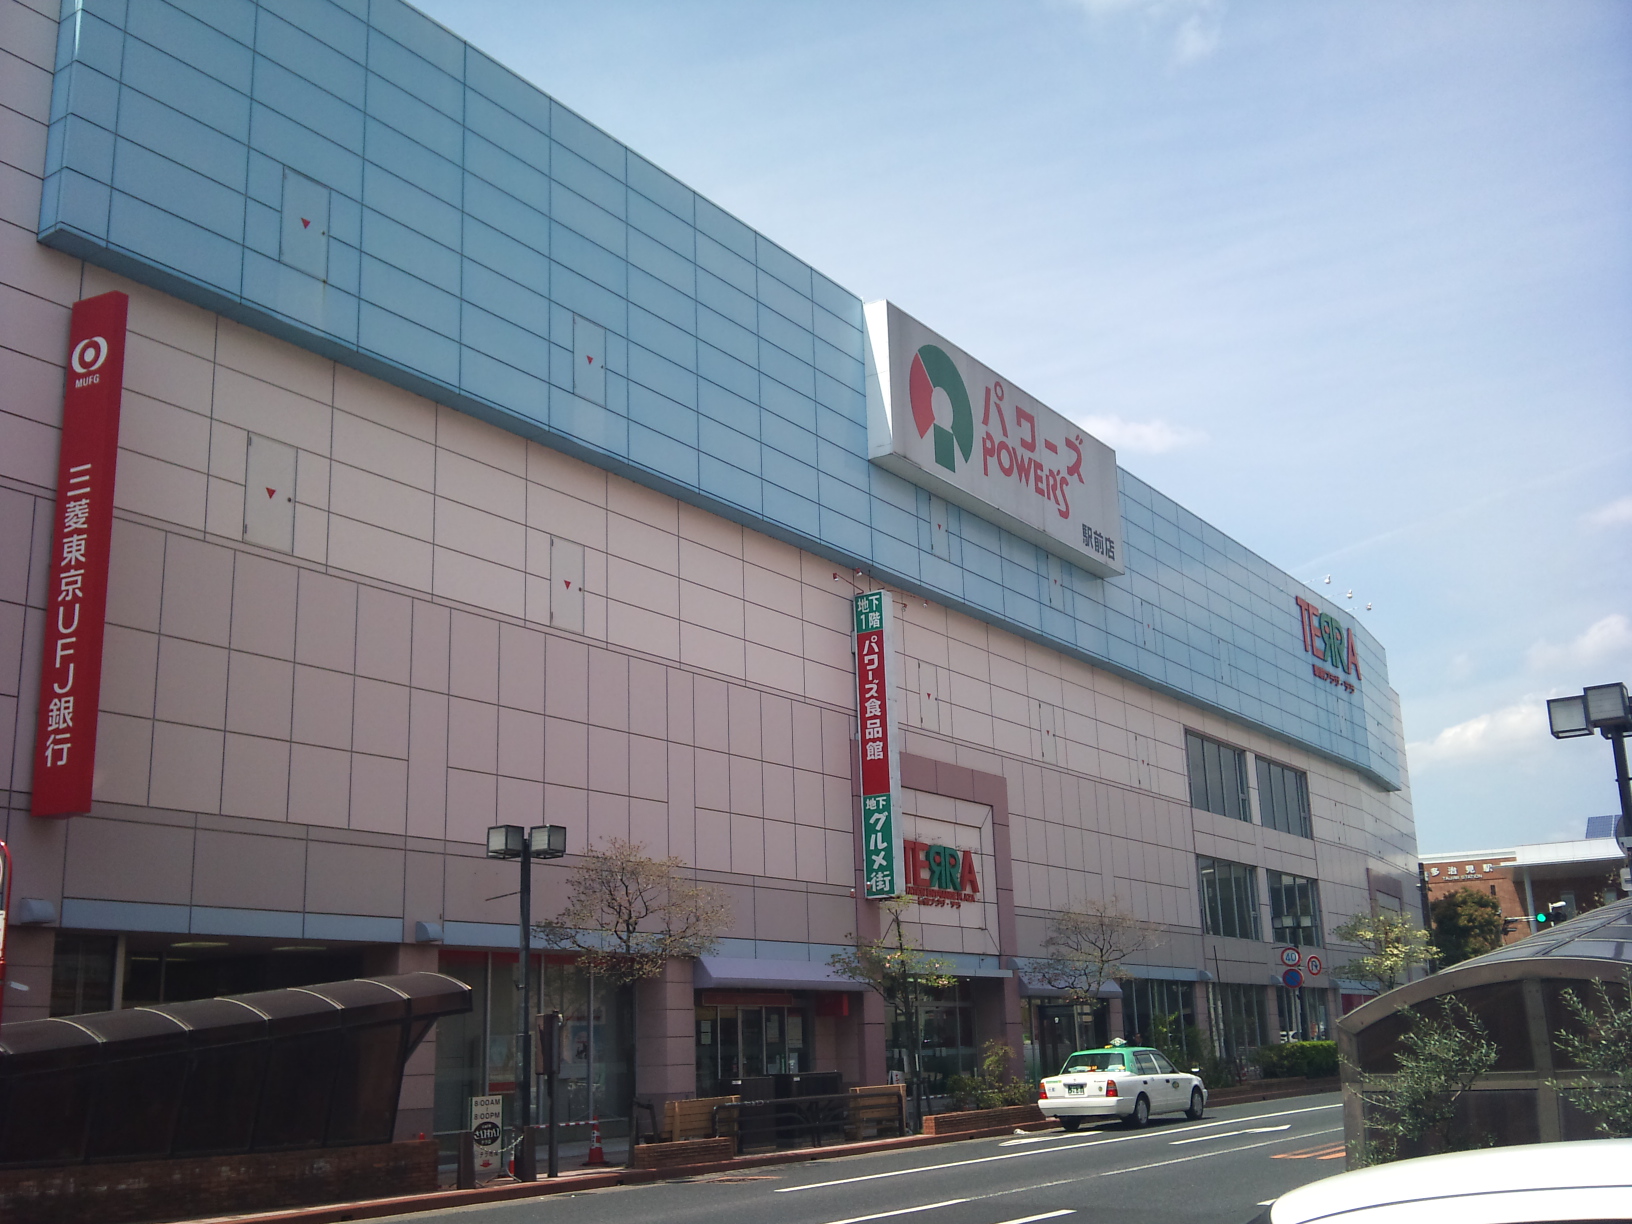 Shopping centre. Station Plaza ・ 456m to Terra (shopping center)